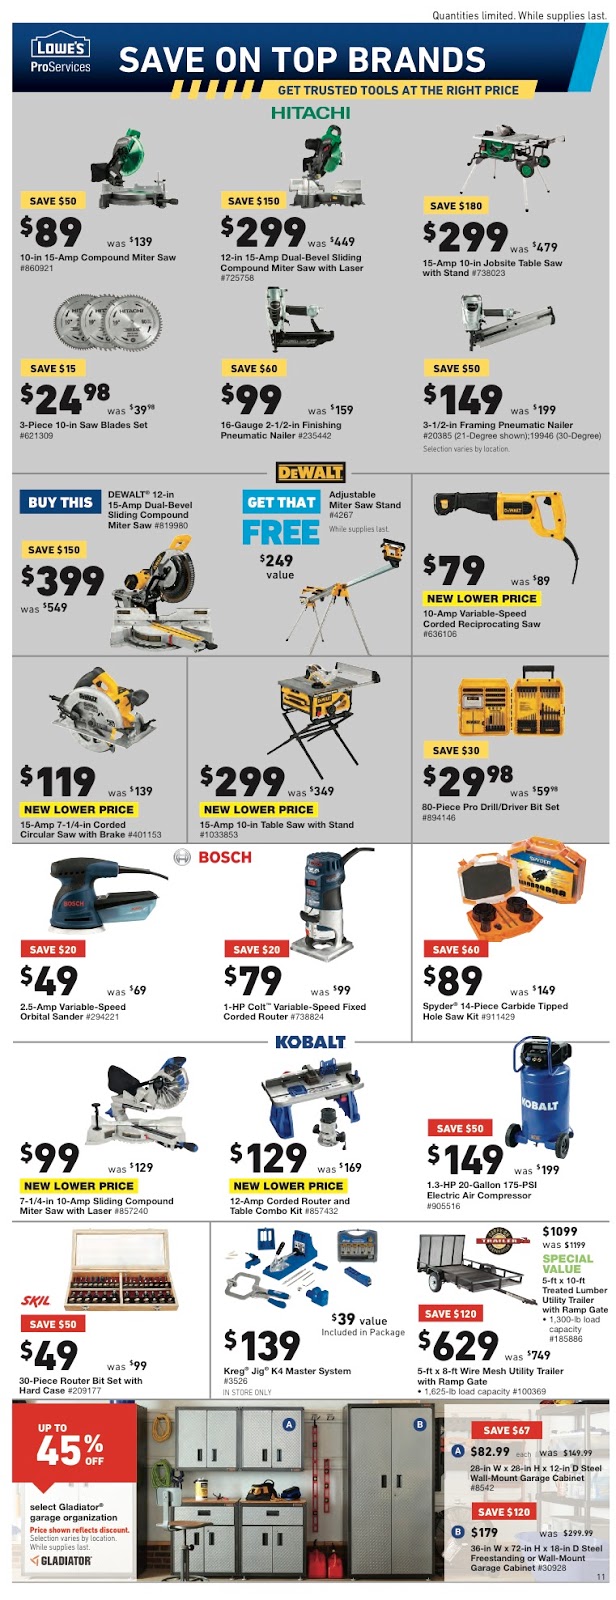 Lowe's Black Friday tools 2018 ad